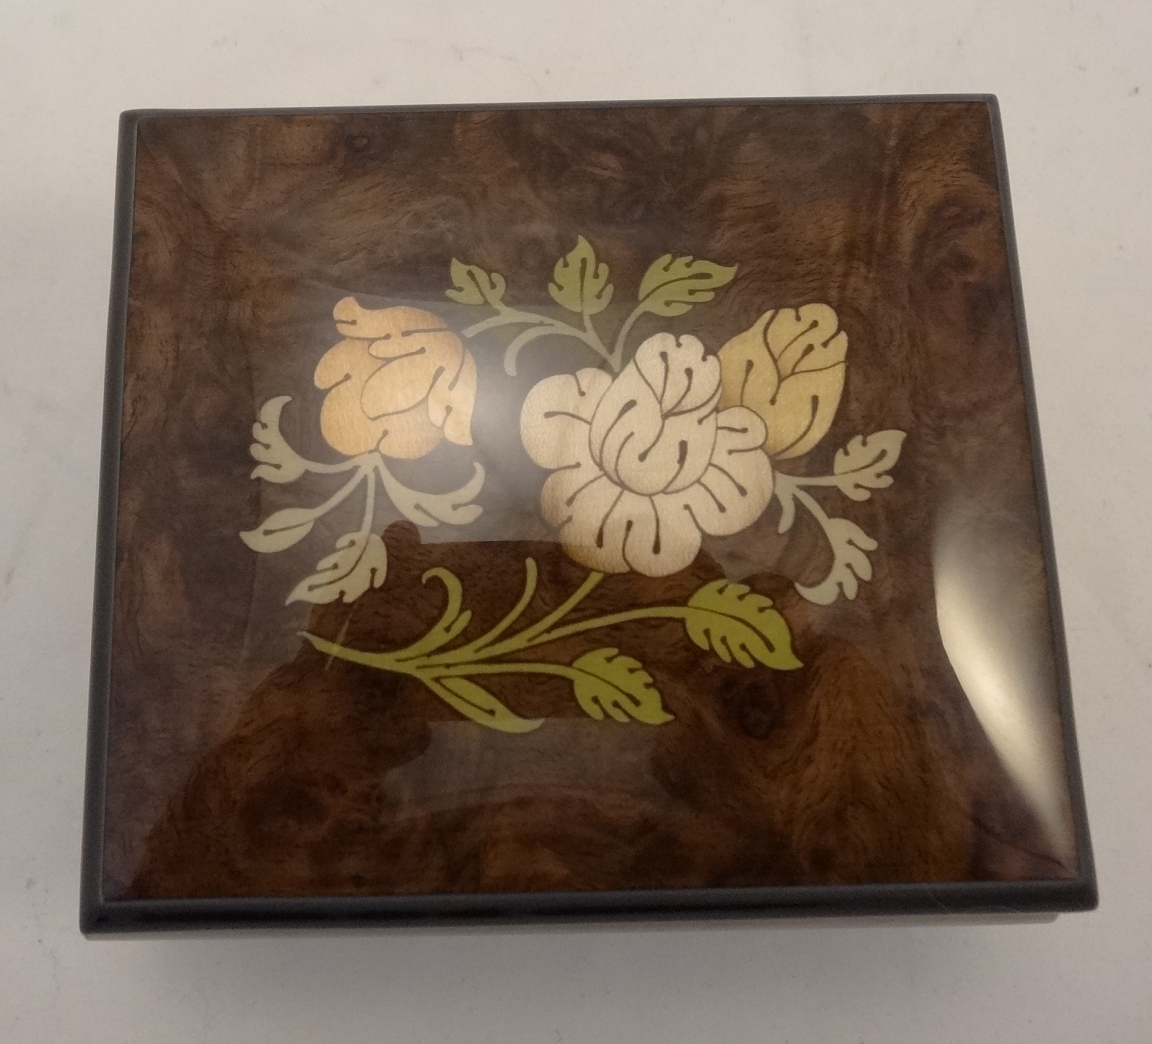 Burl walnut high gloss music box with flowers inlay